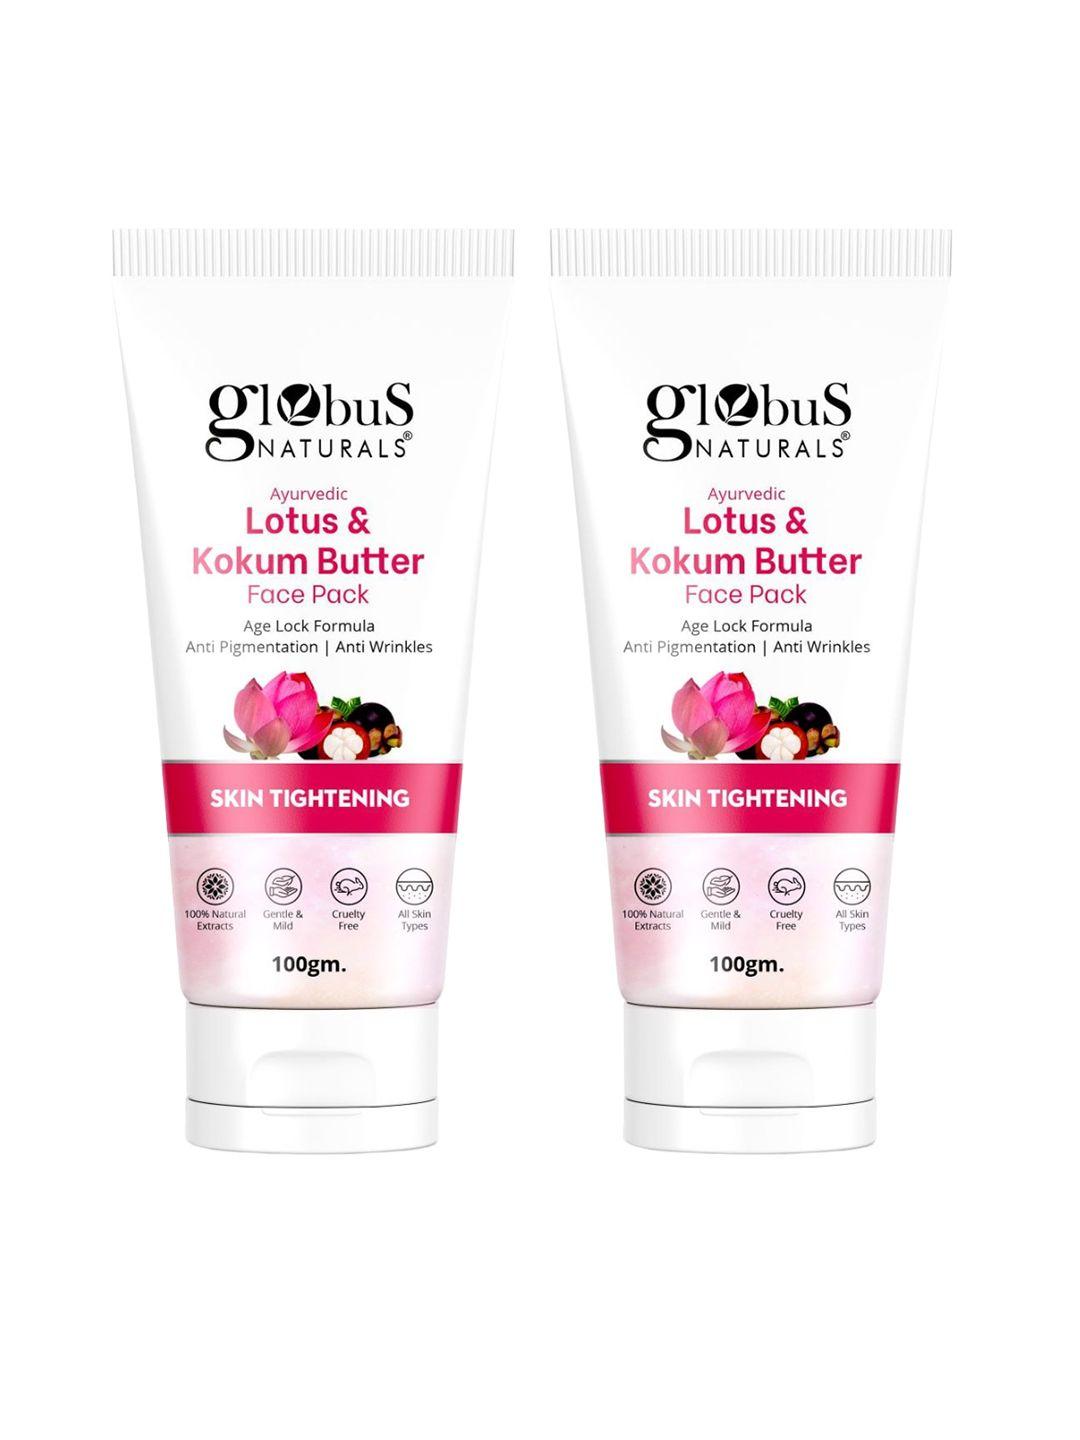 globus naturals ayurvedic set of 2 lotus & kokum butter face pack for anti-ageing & skin lightening - 100 gm each